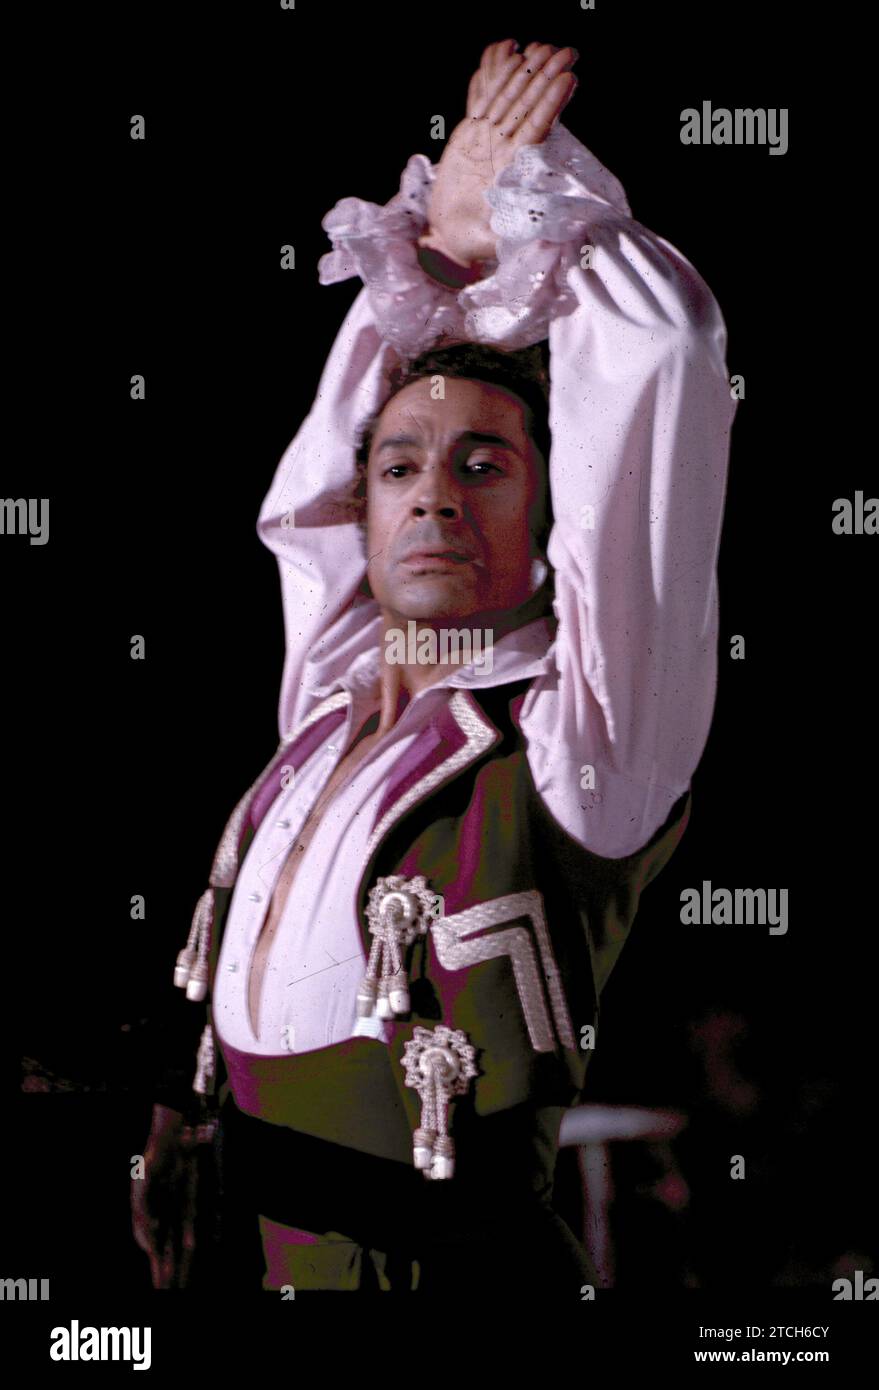 01/01/1970. Foto von Antonio dem Tänzer. Quelle: Album/Archivo ABC Stockfoto